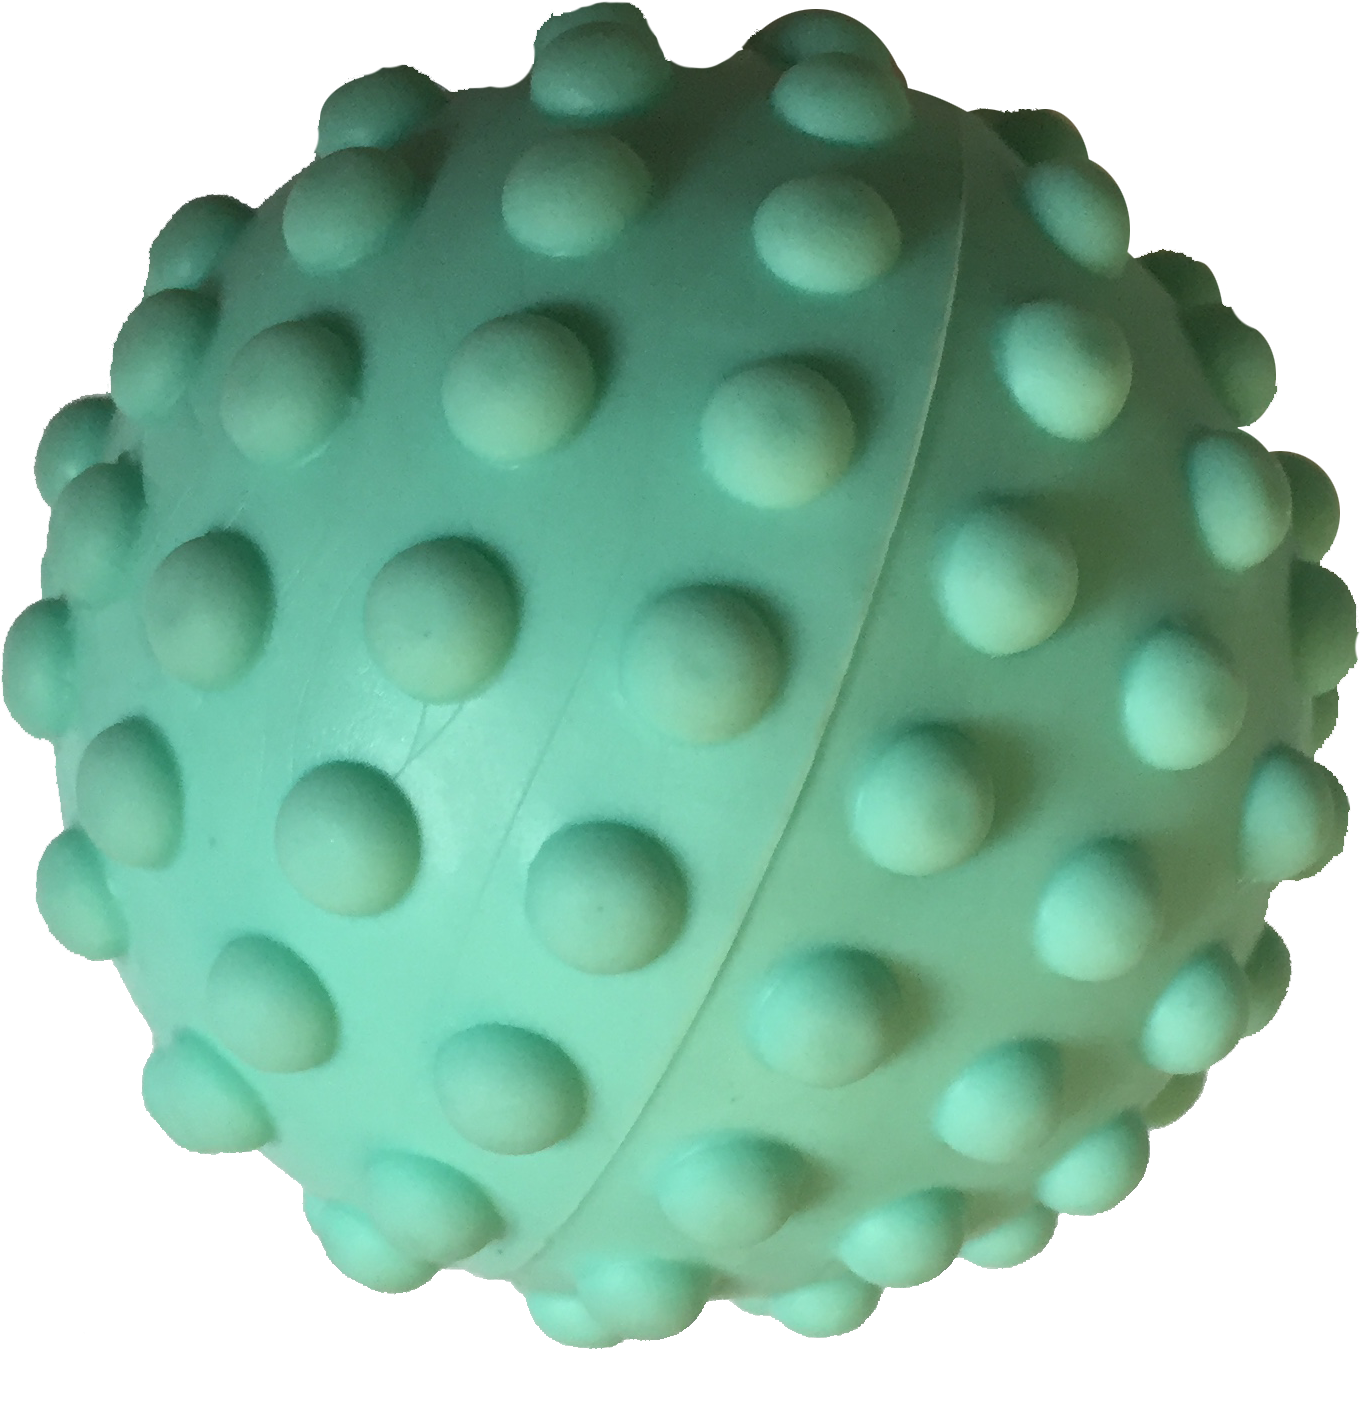 A Close Up Of A Ball